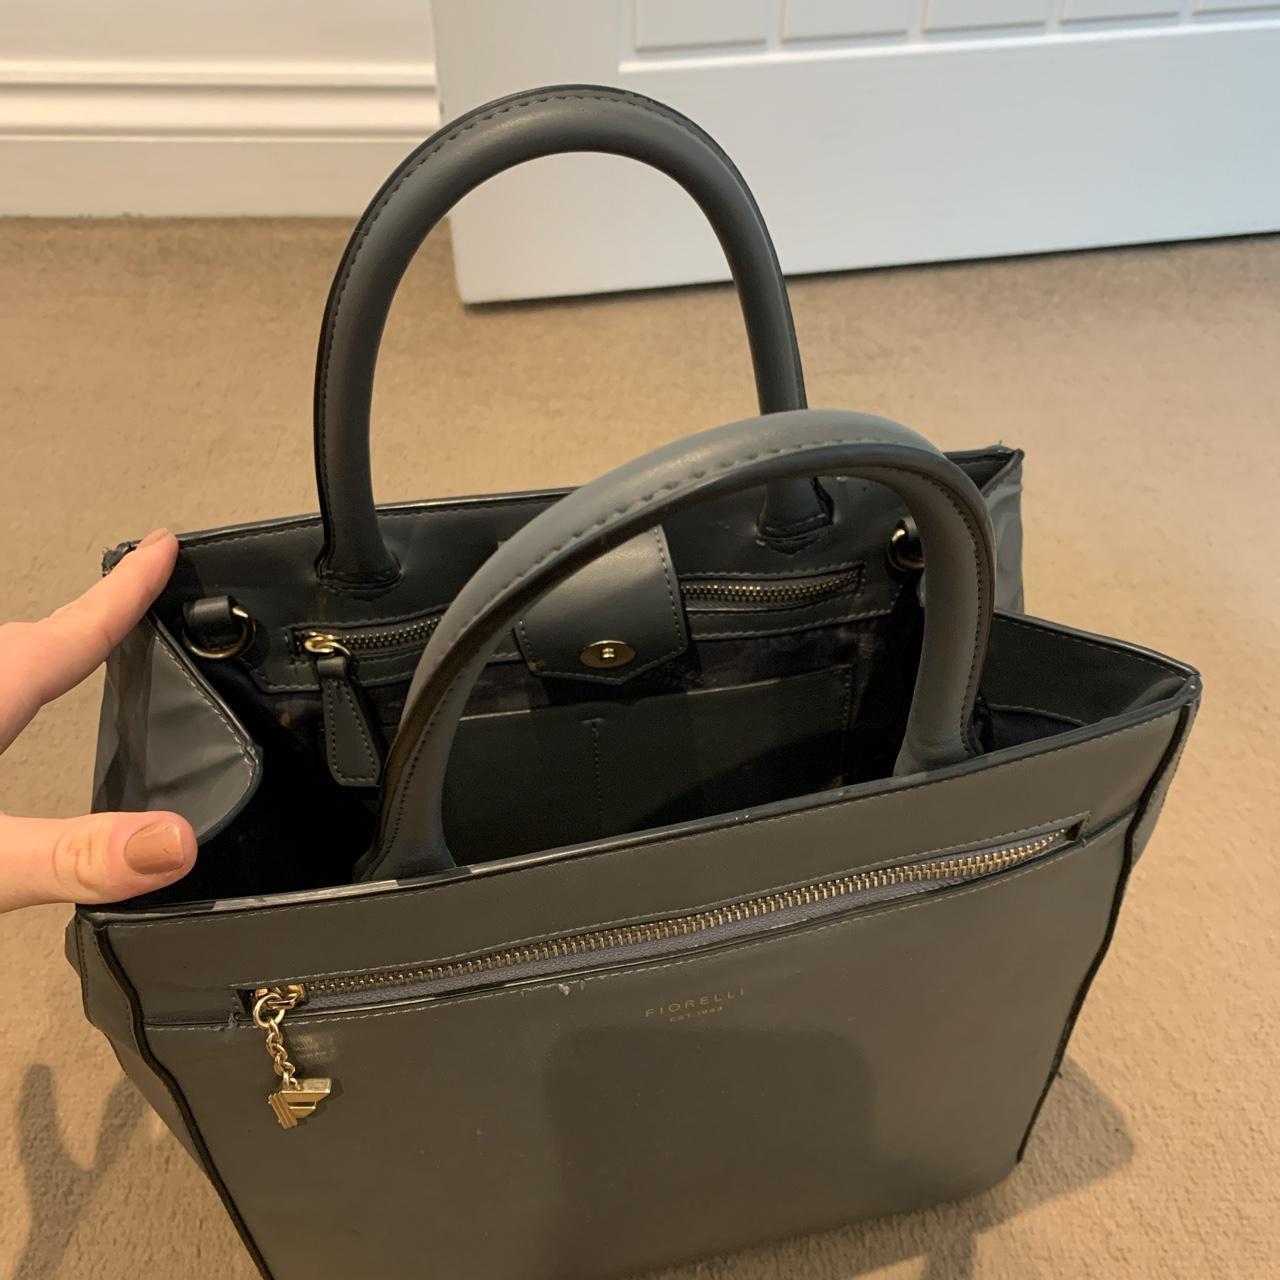 Gorgeous leather fiorelli handbag. Grey , in very... - Depop